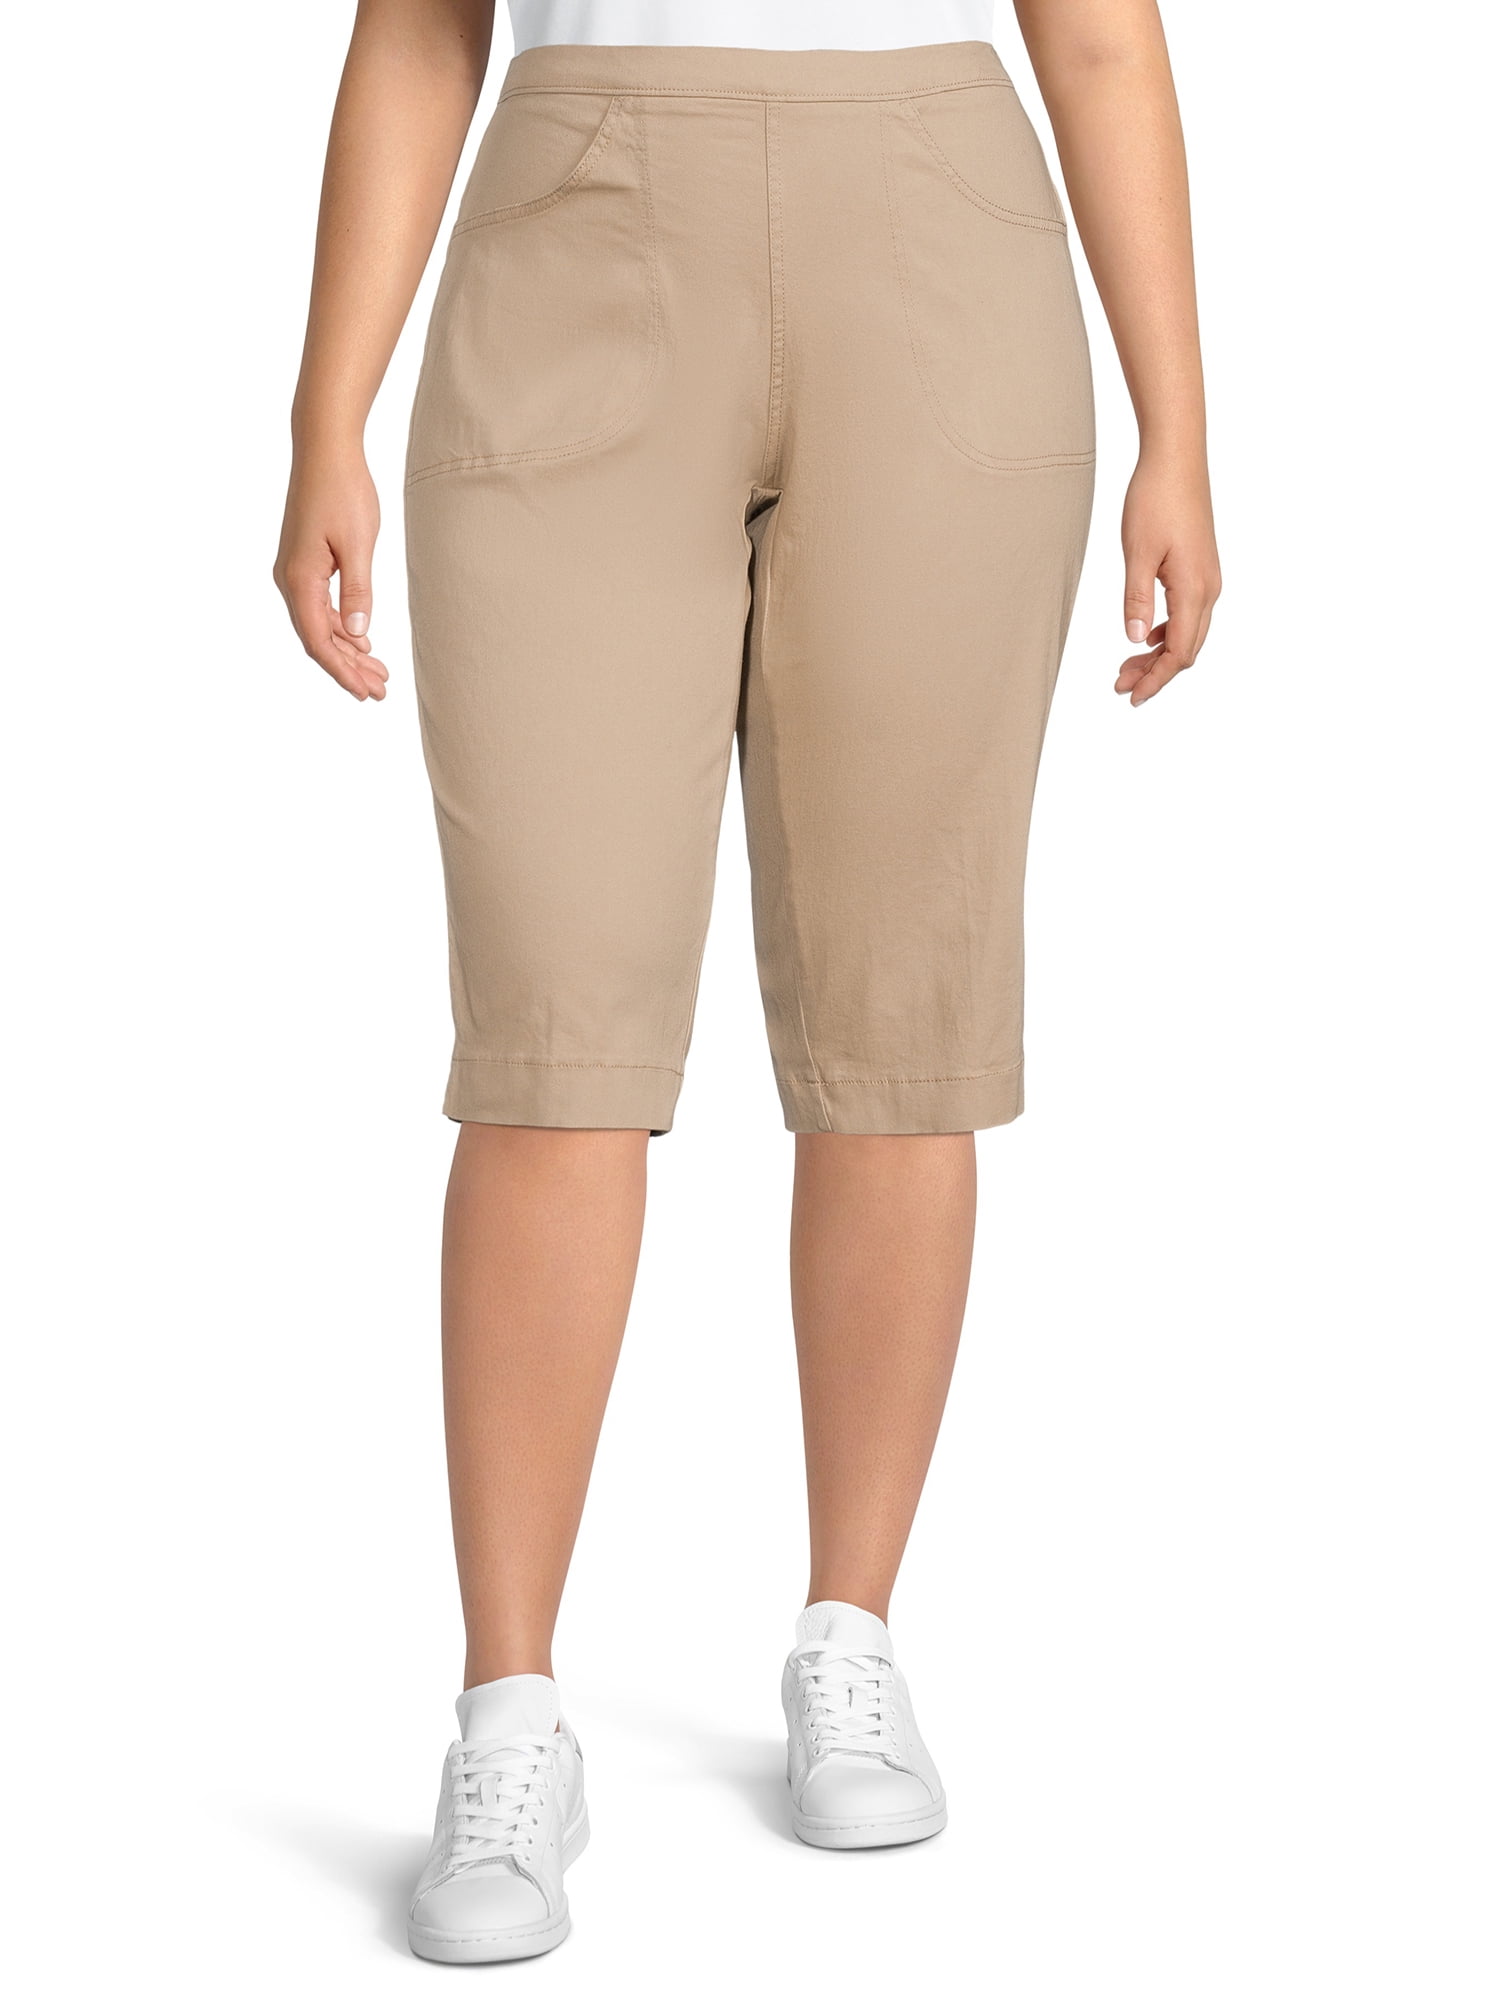 JMS by Hanes Women's Plus Size Stretch Jersey Capri Legging